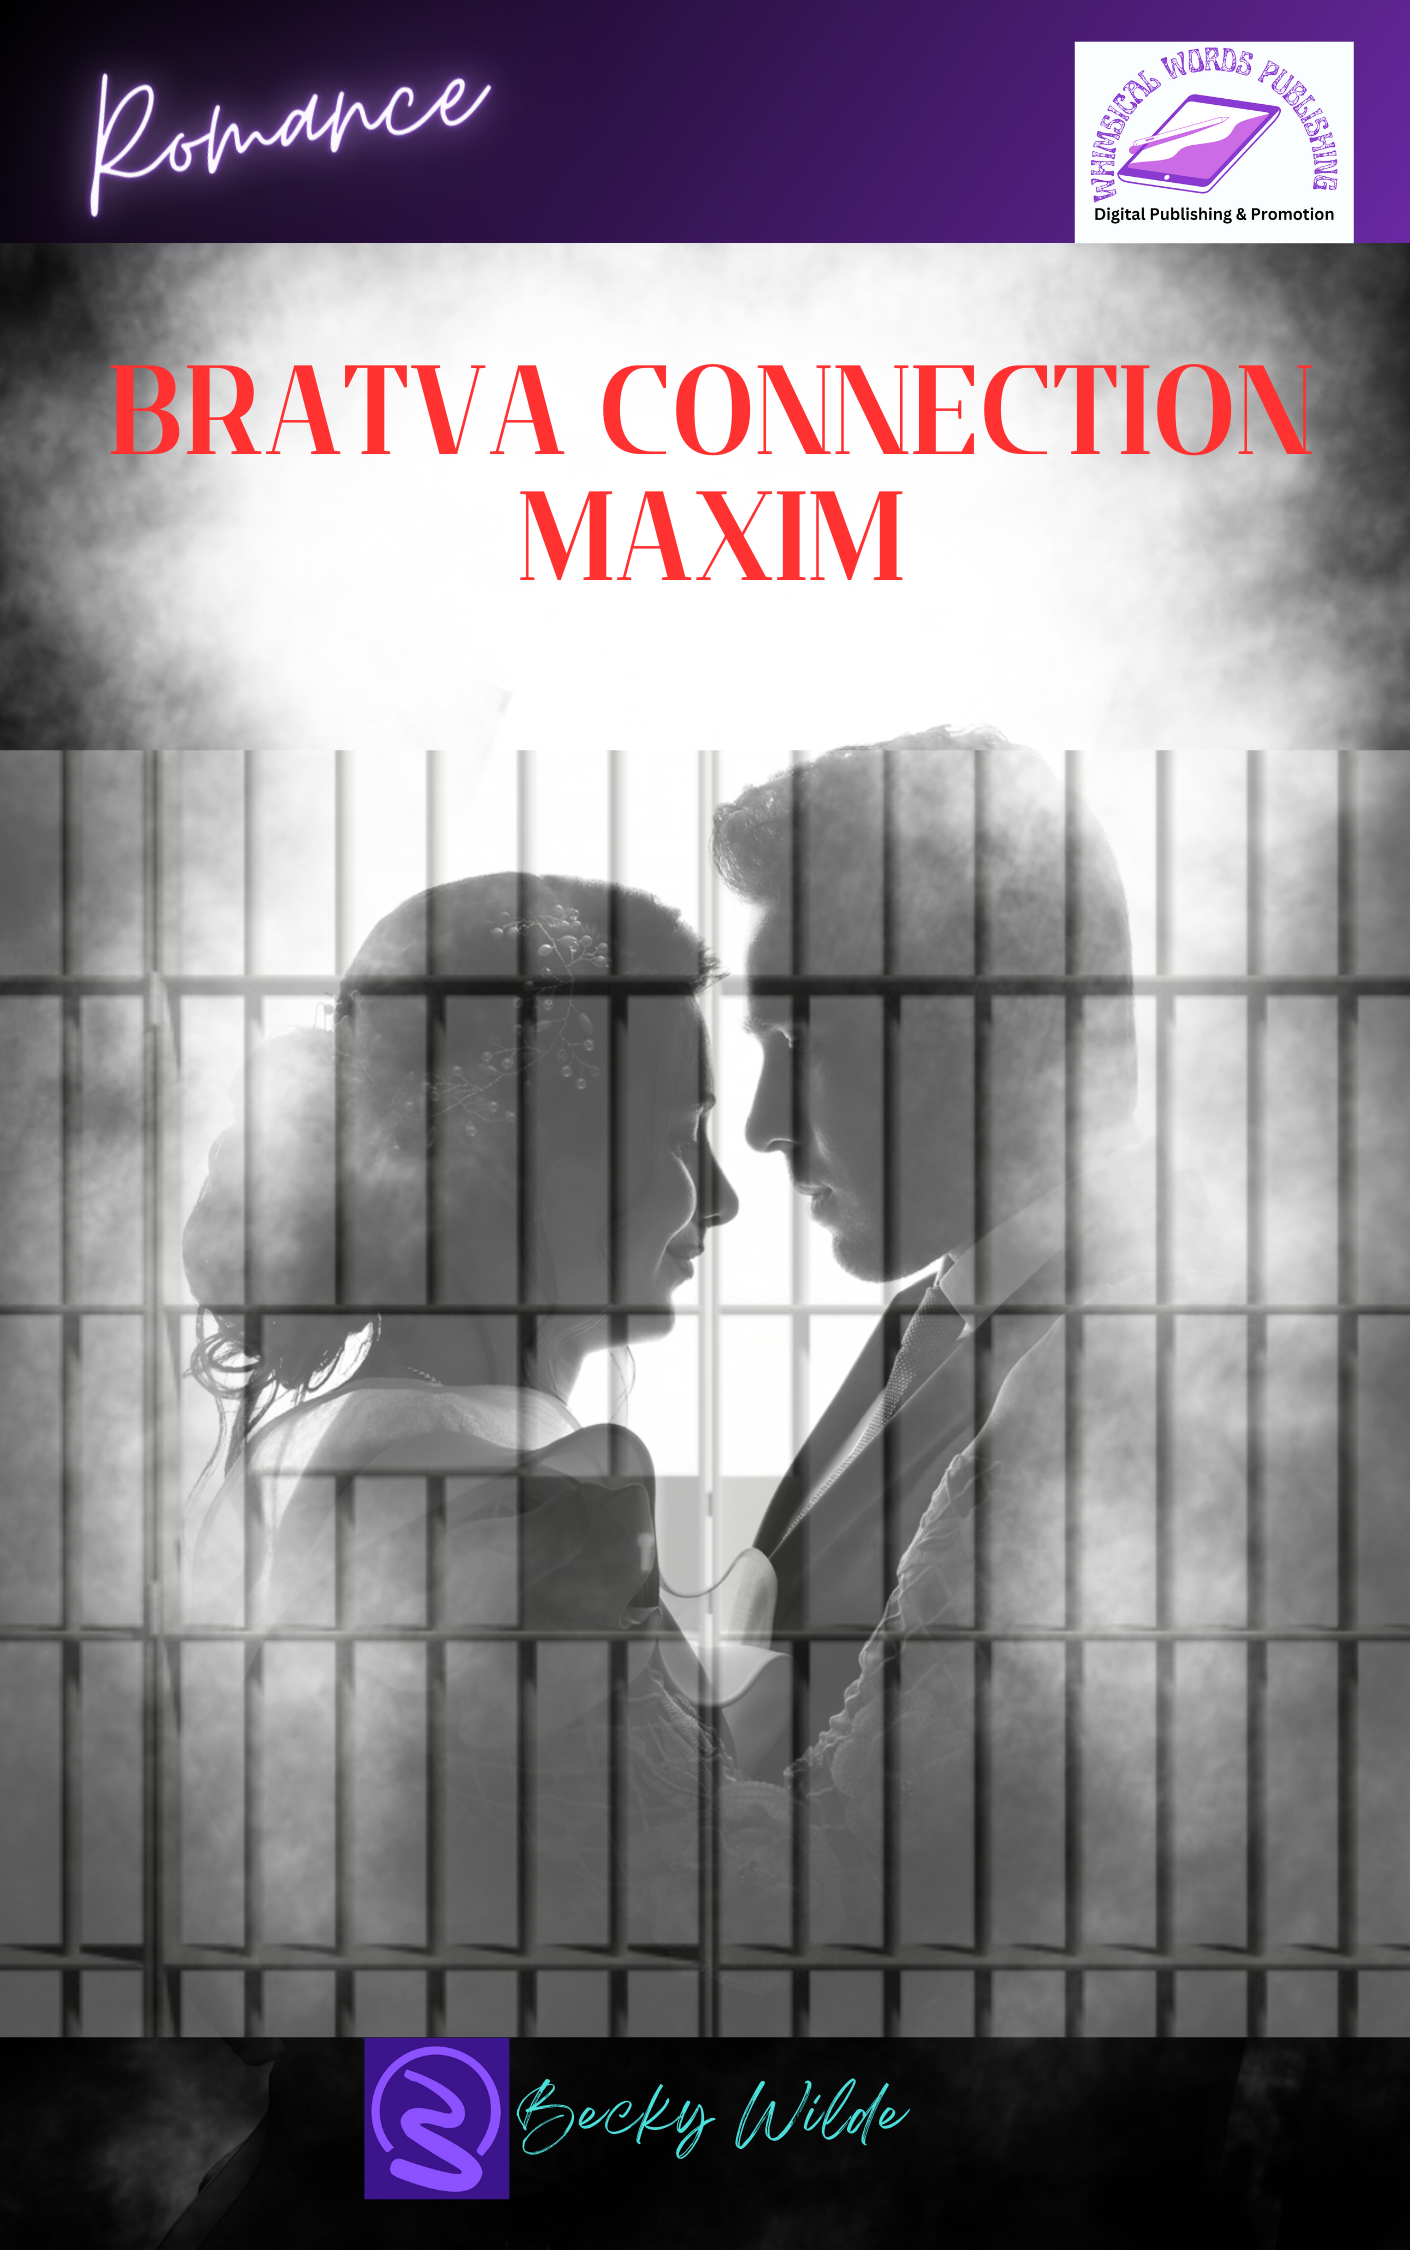 Bratva Connection: Maxim Book 1 by Becky Wilde